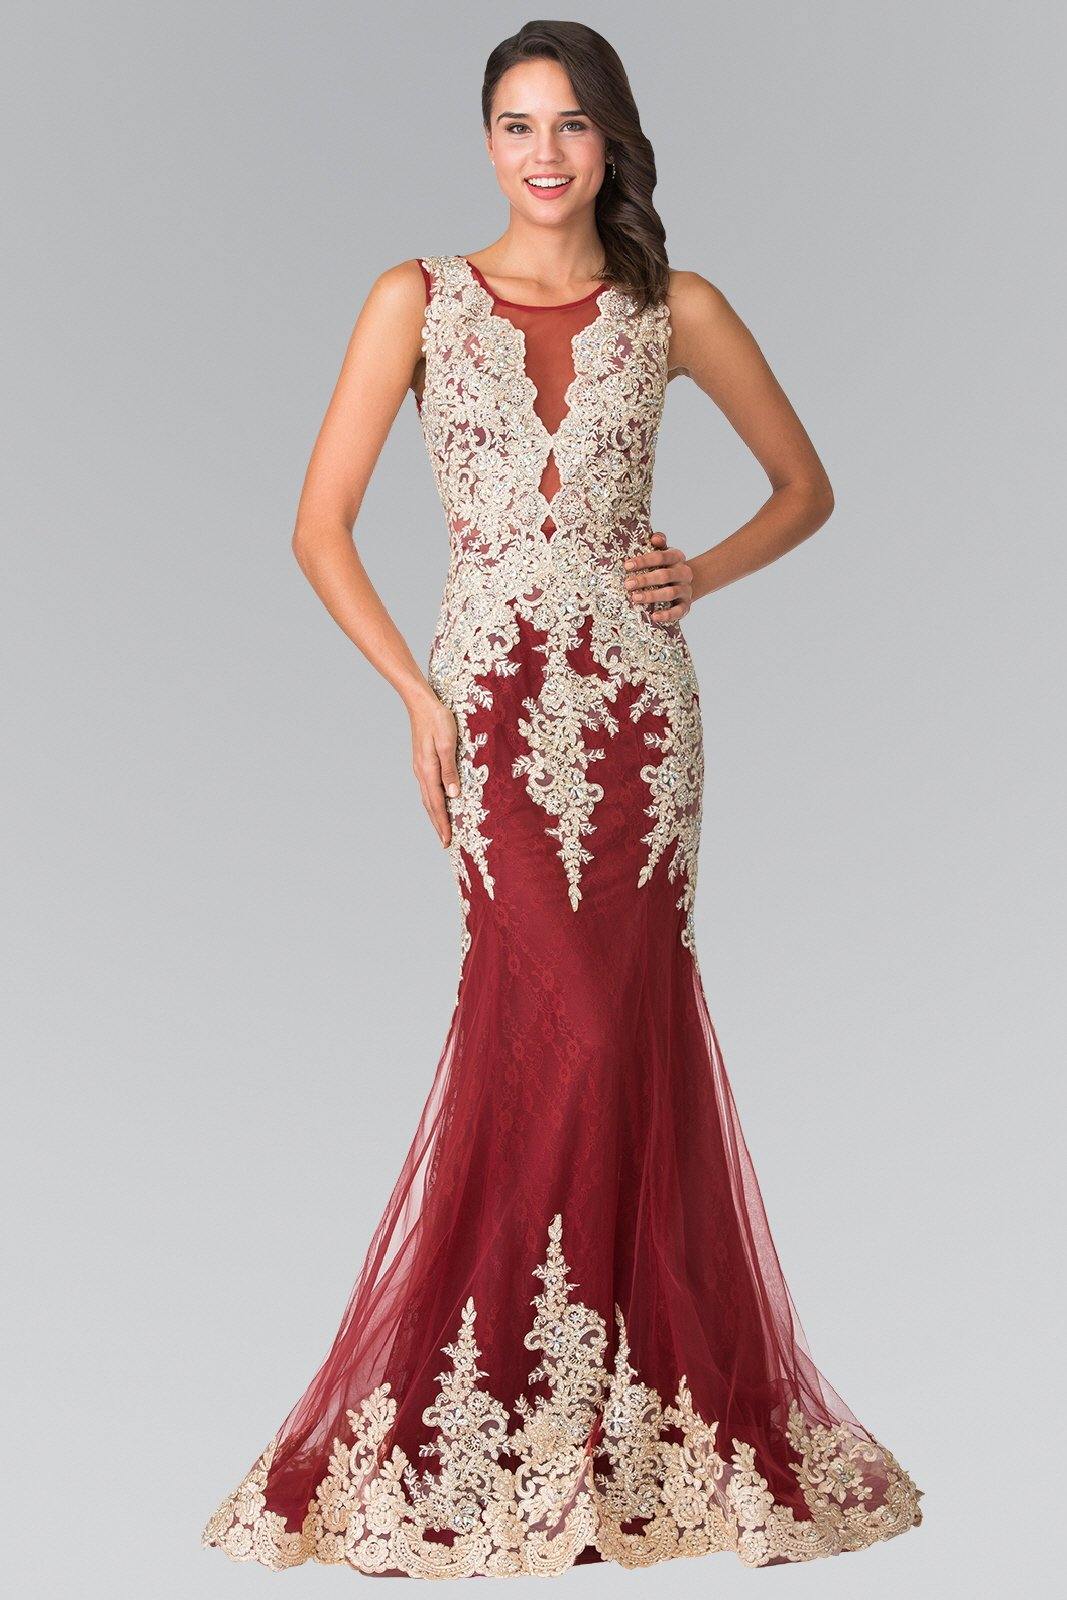 Jewels Embellished Lace Illusion Long Prom Dress - The Dress Outlet Elizabeth K